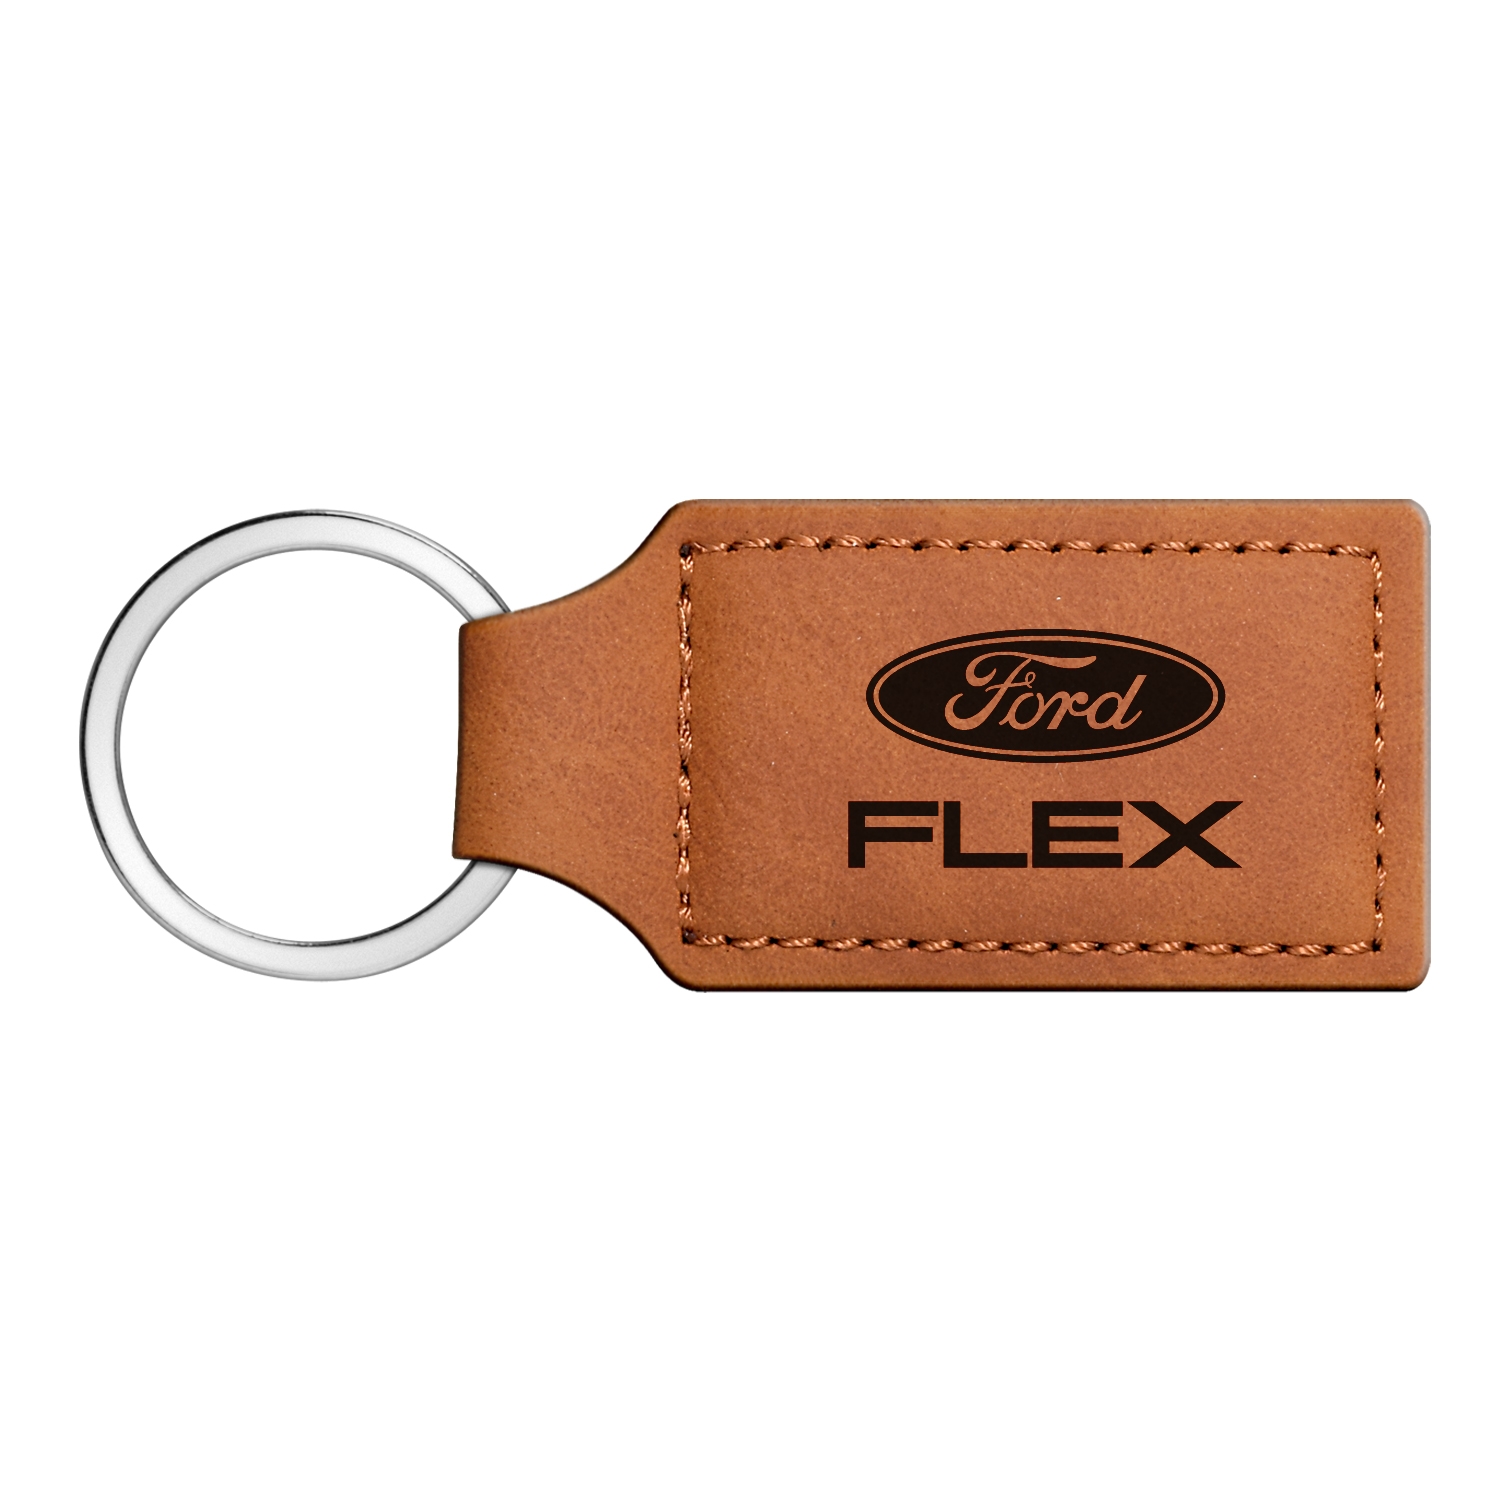 Ford Flex Rectangular Brown Leather Key Chain